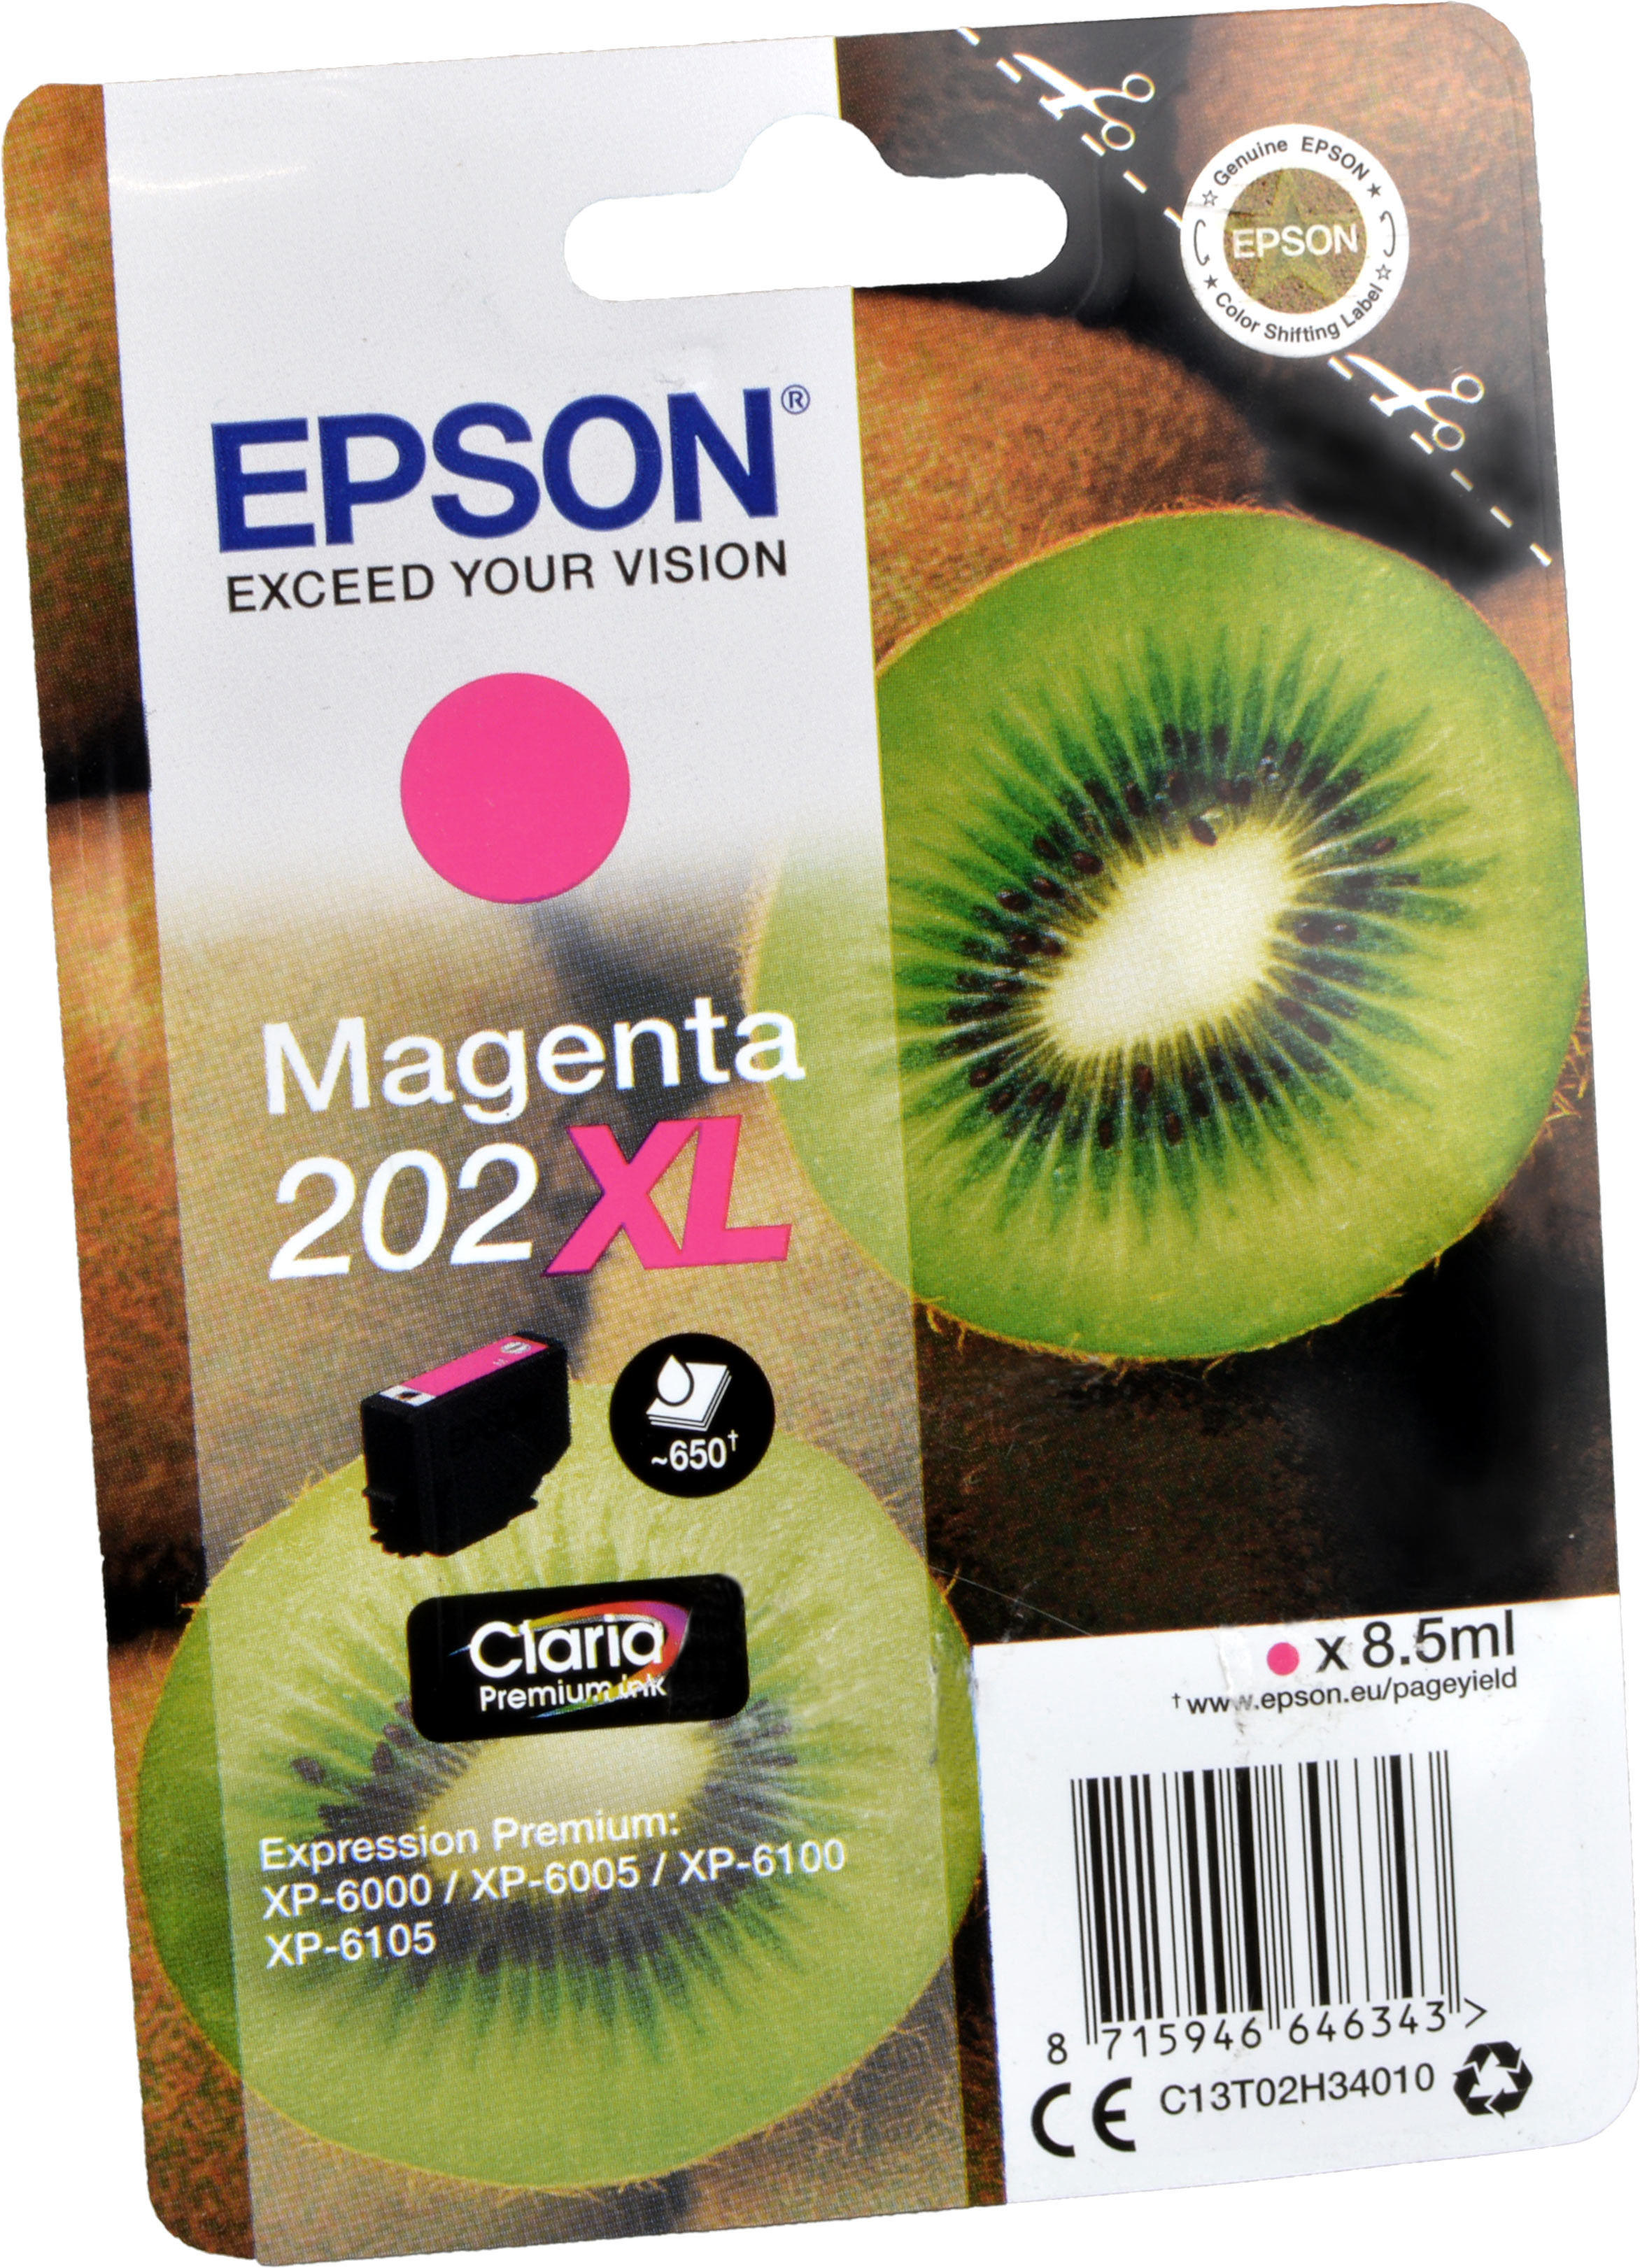 Epson Tinte C13T02H34010  Magenta 202XL  magenta